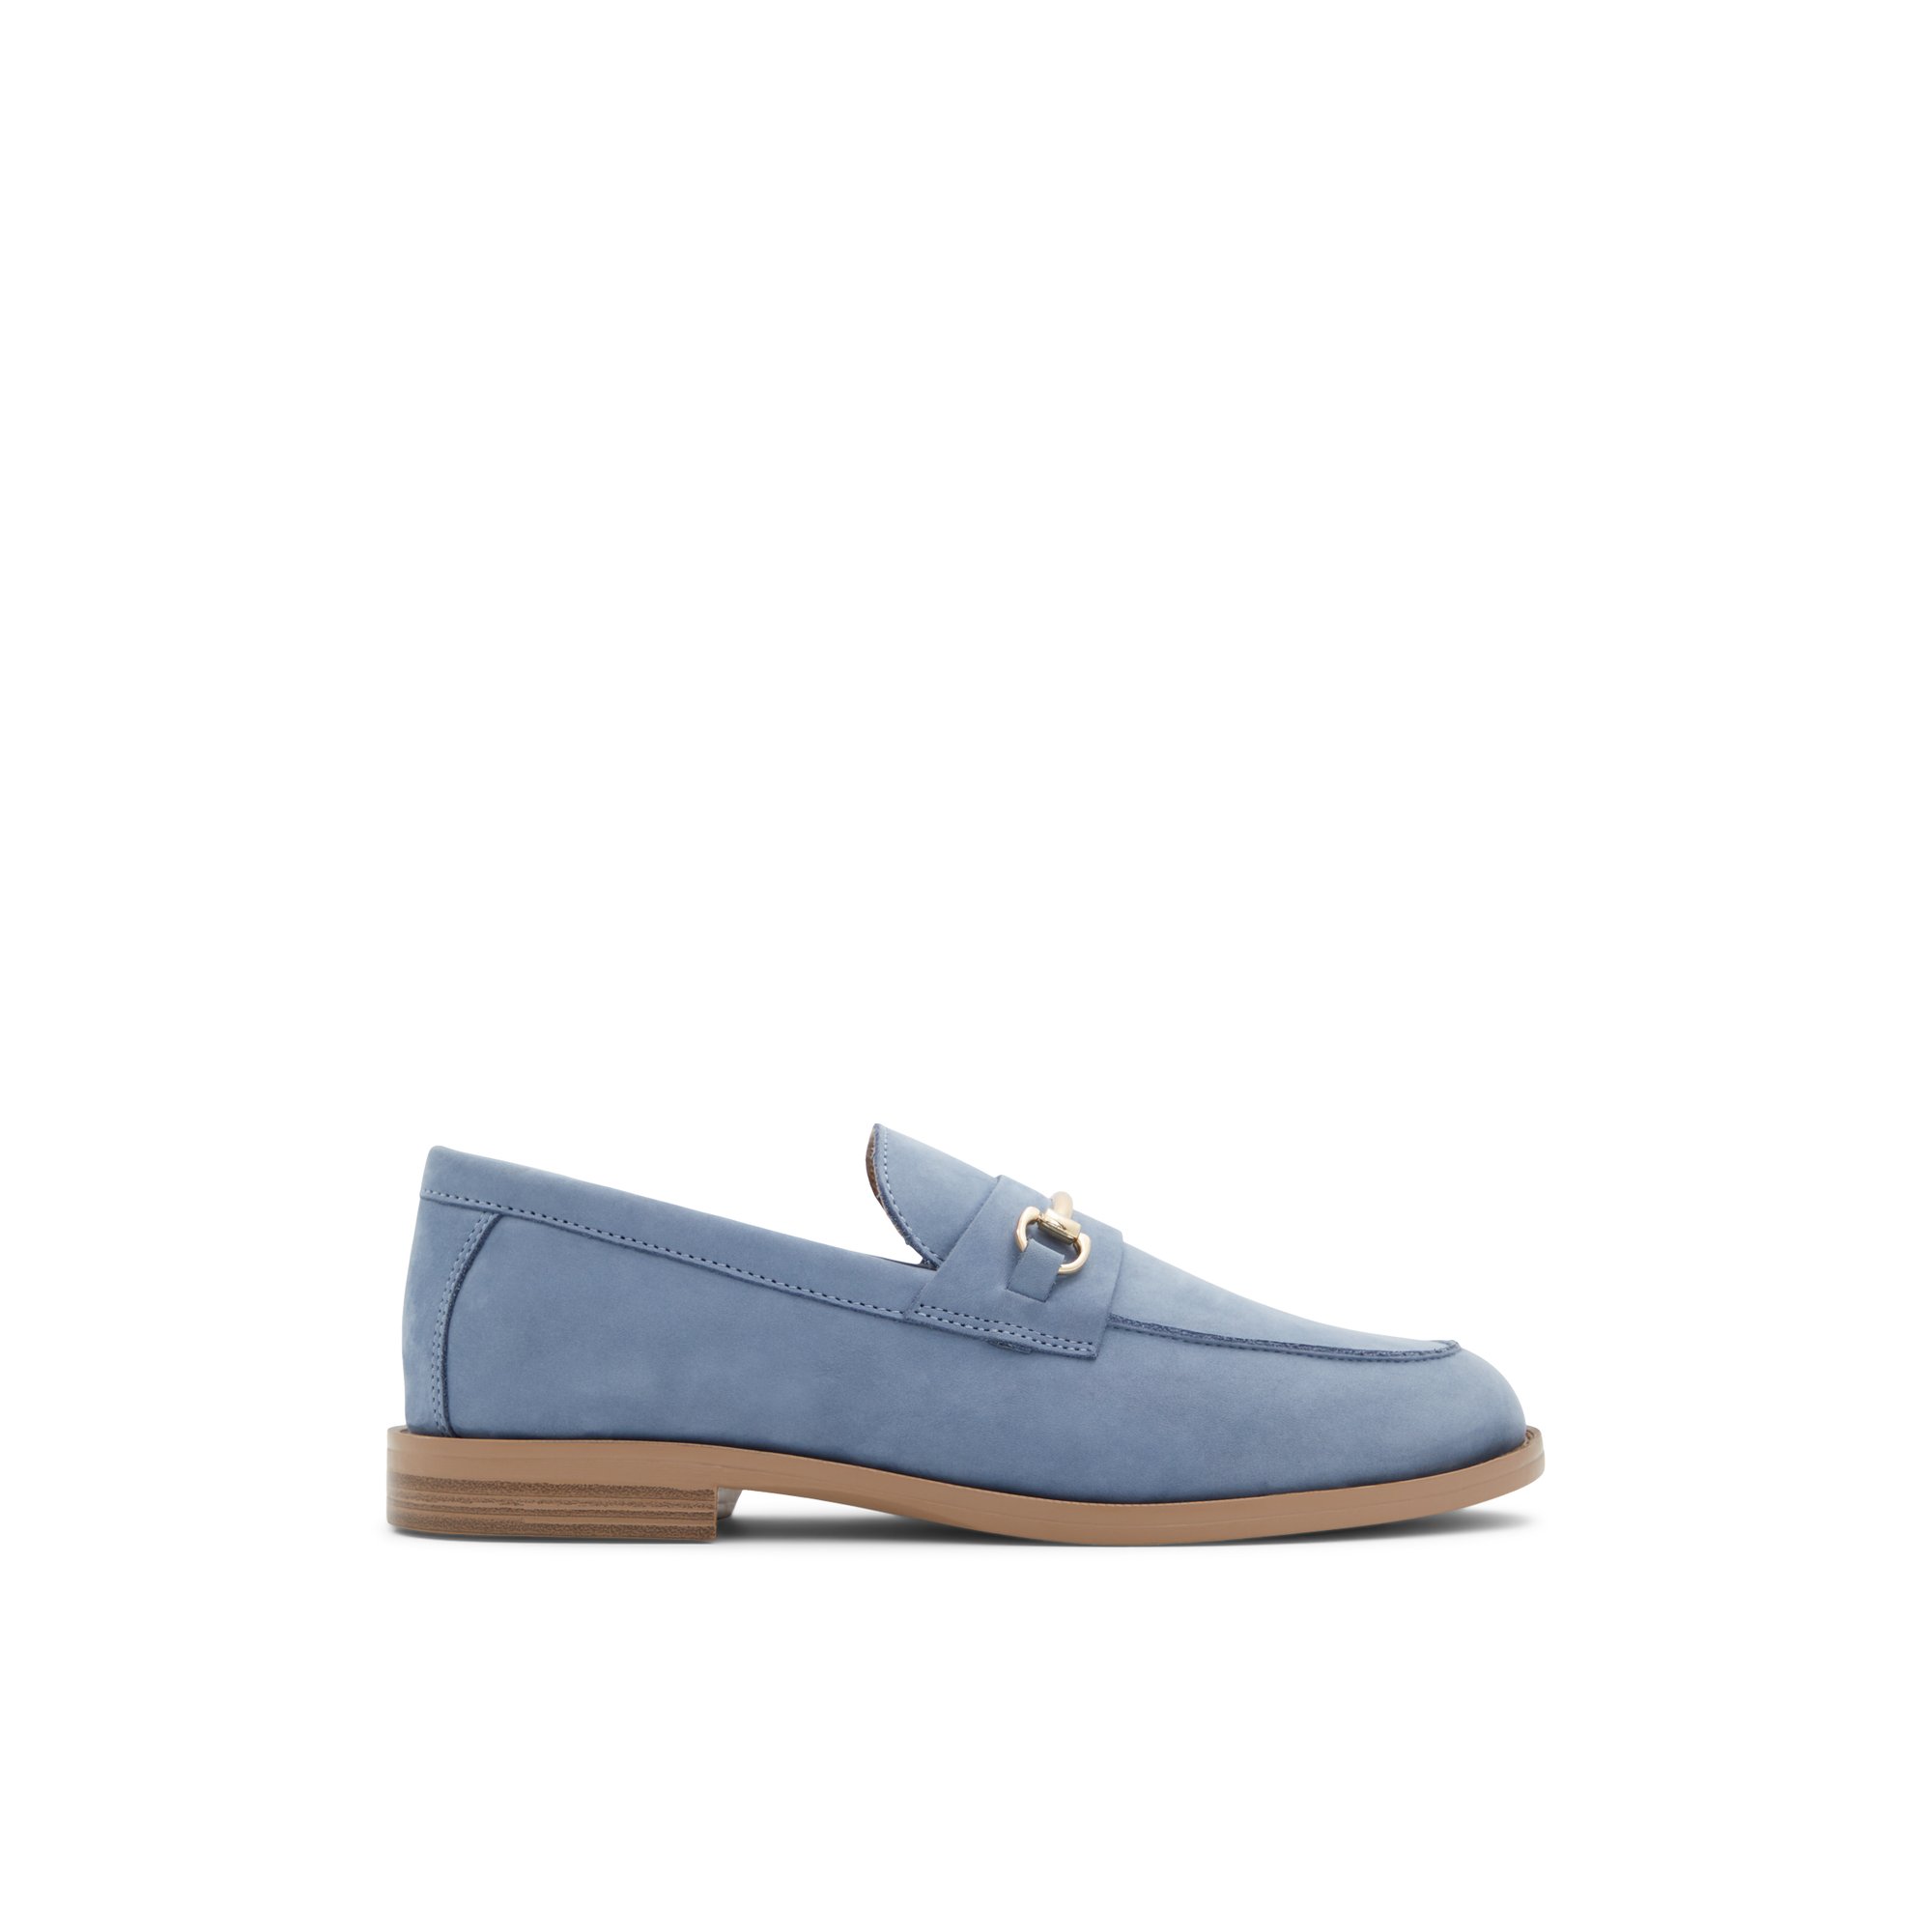 ALDO Derena - Women's Loafers - Blue